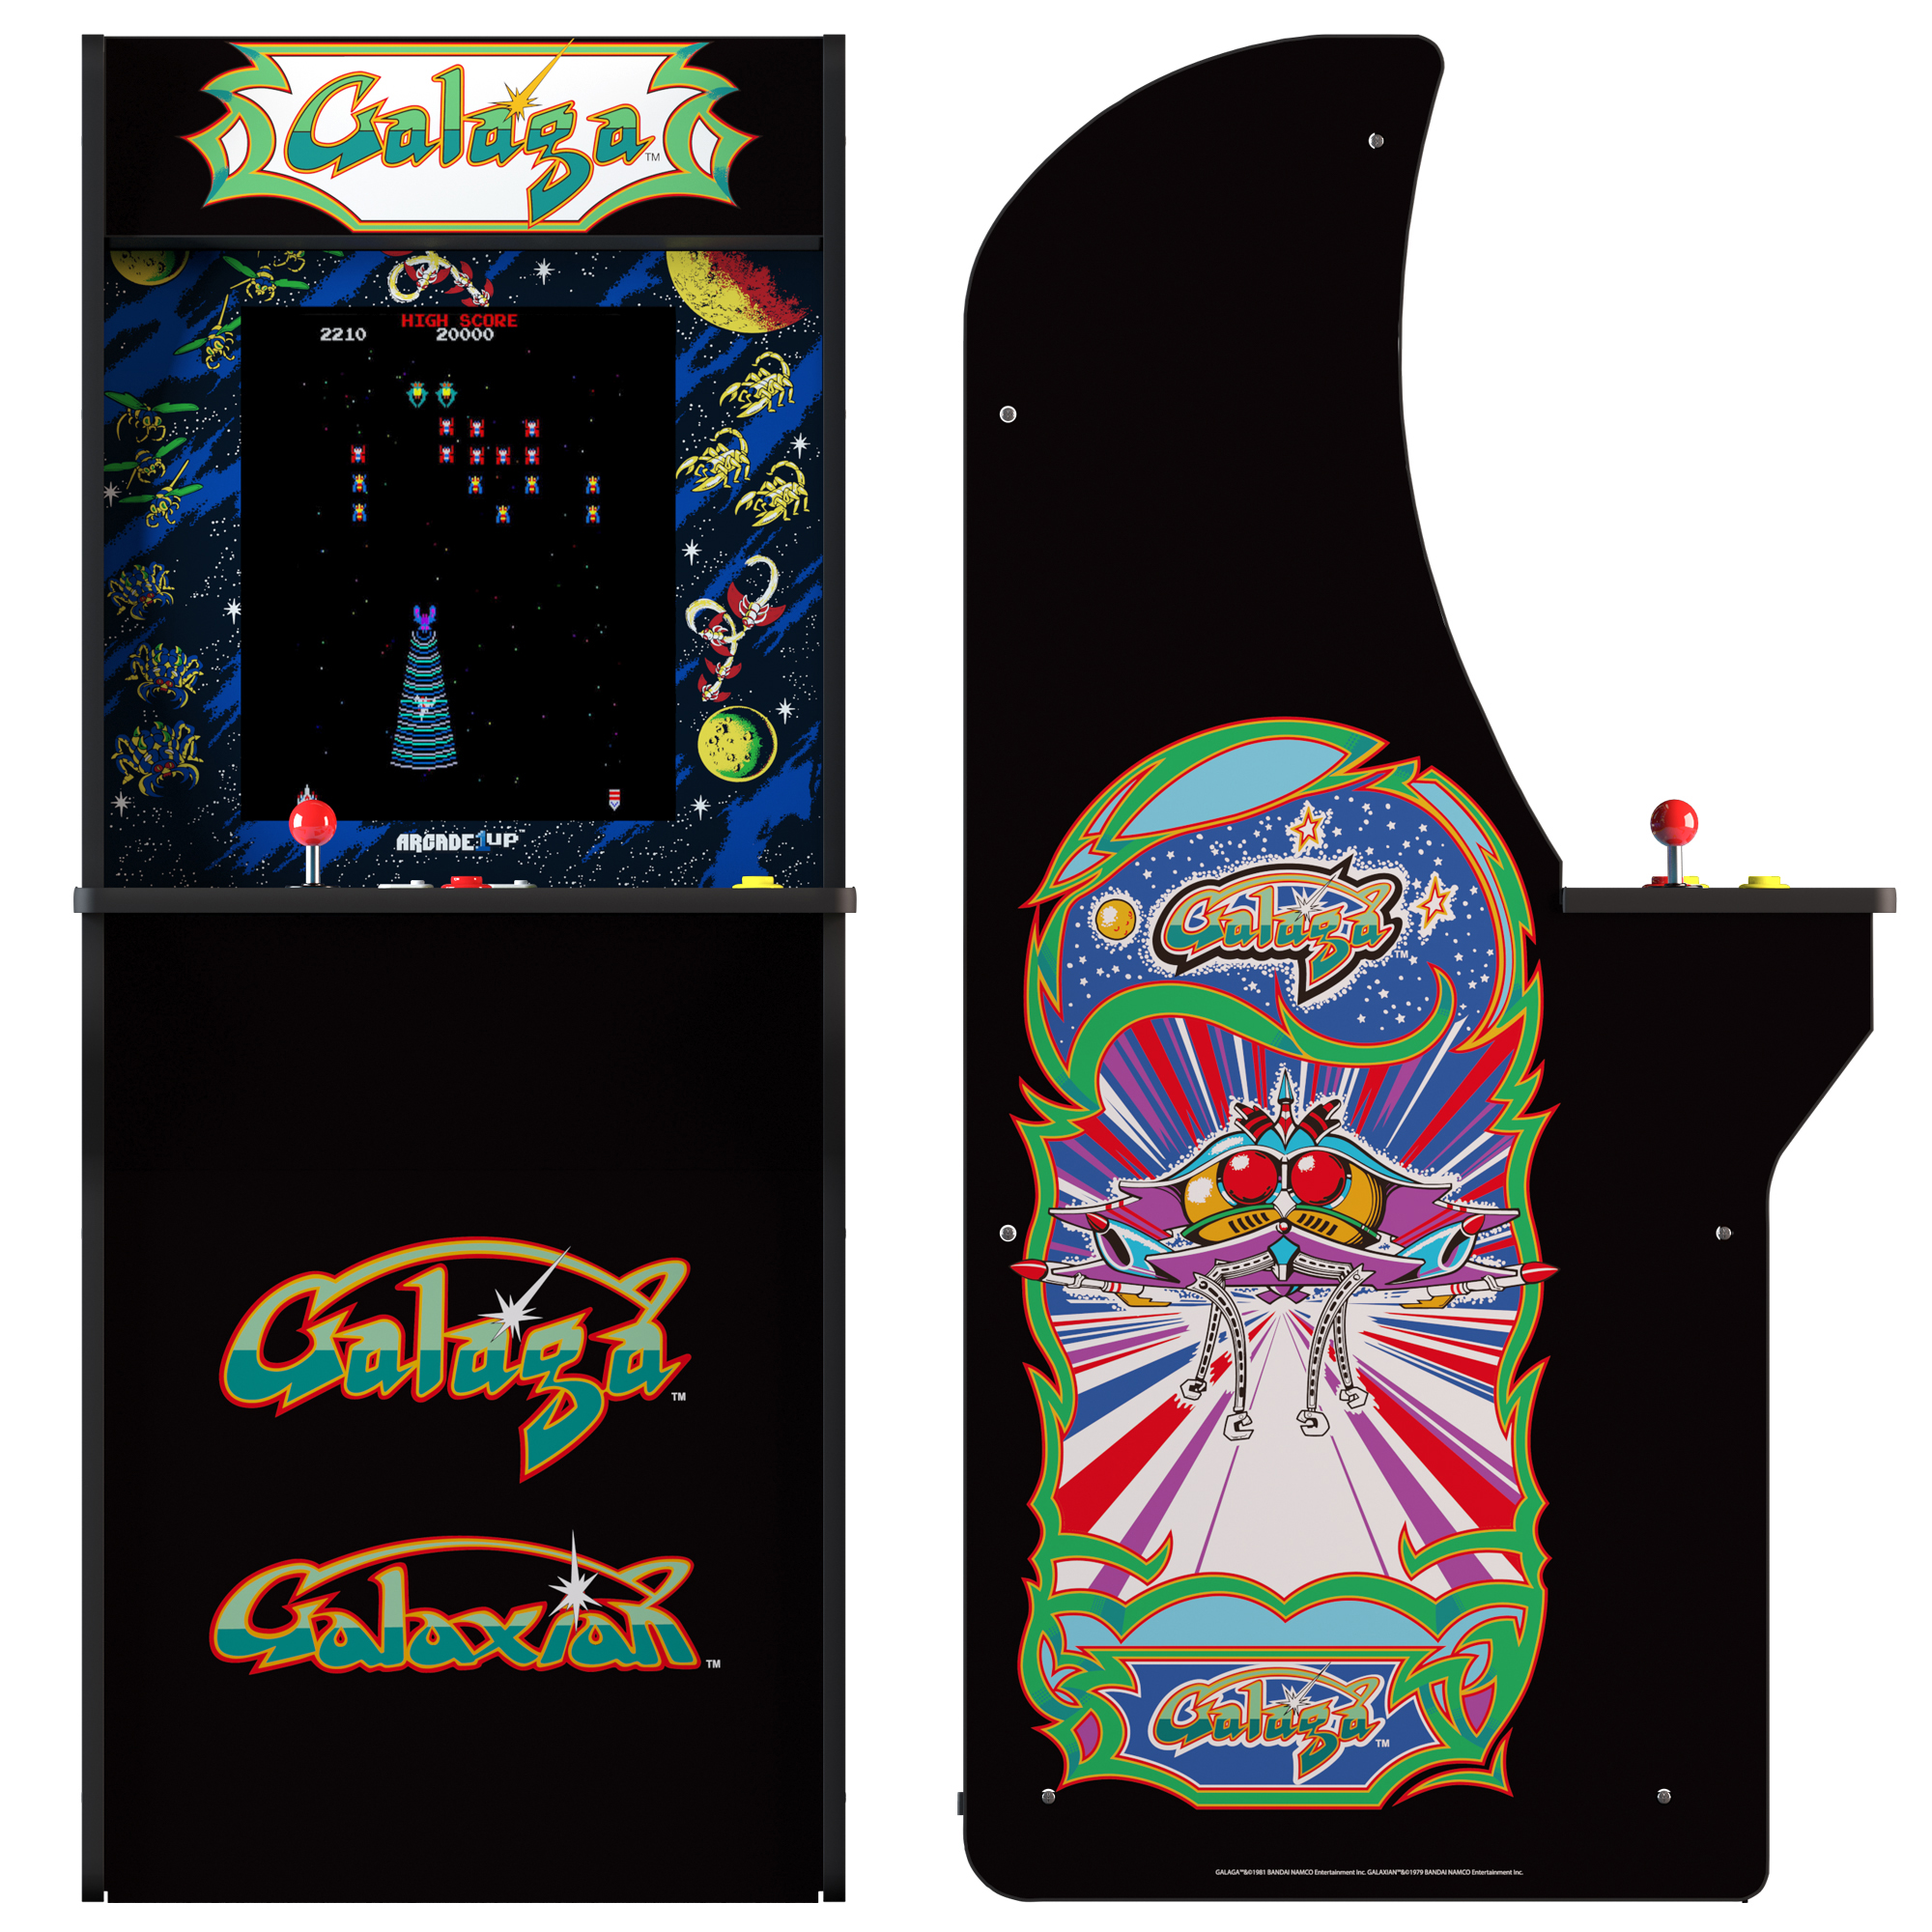 Galaga Arcade Machine with Riser, Arcade1UP - image 4 of 4